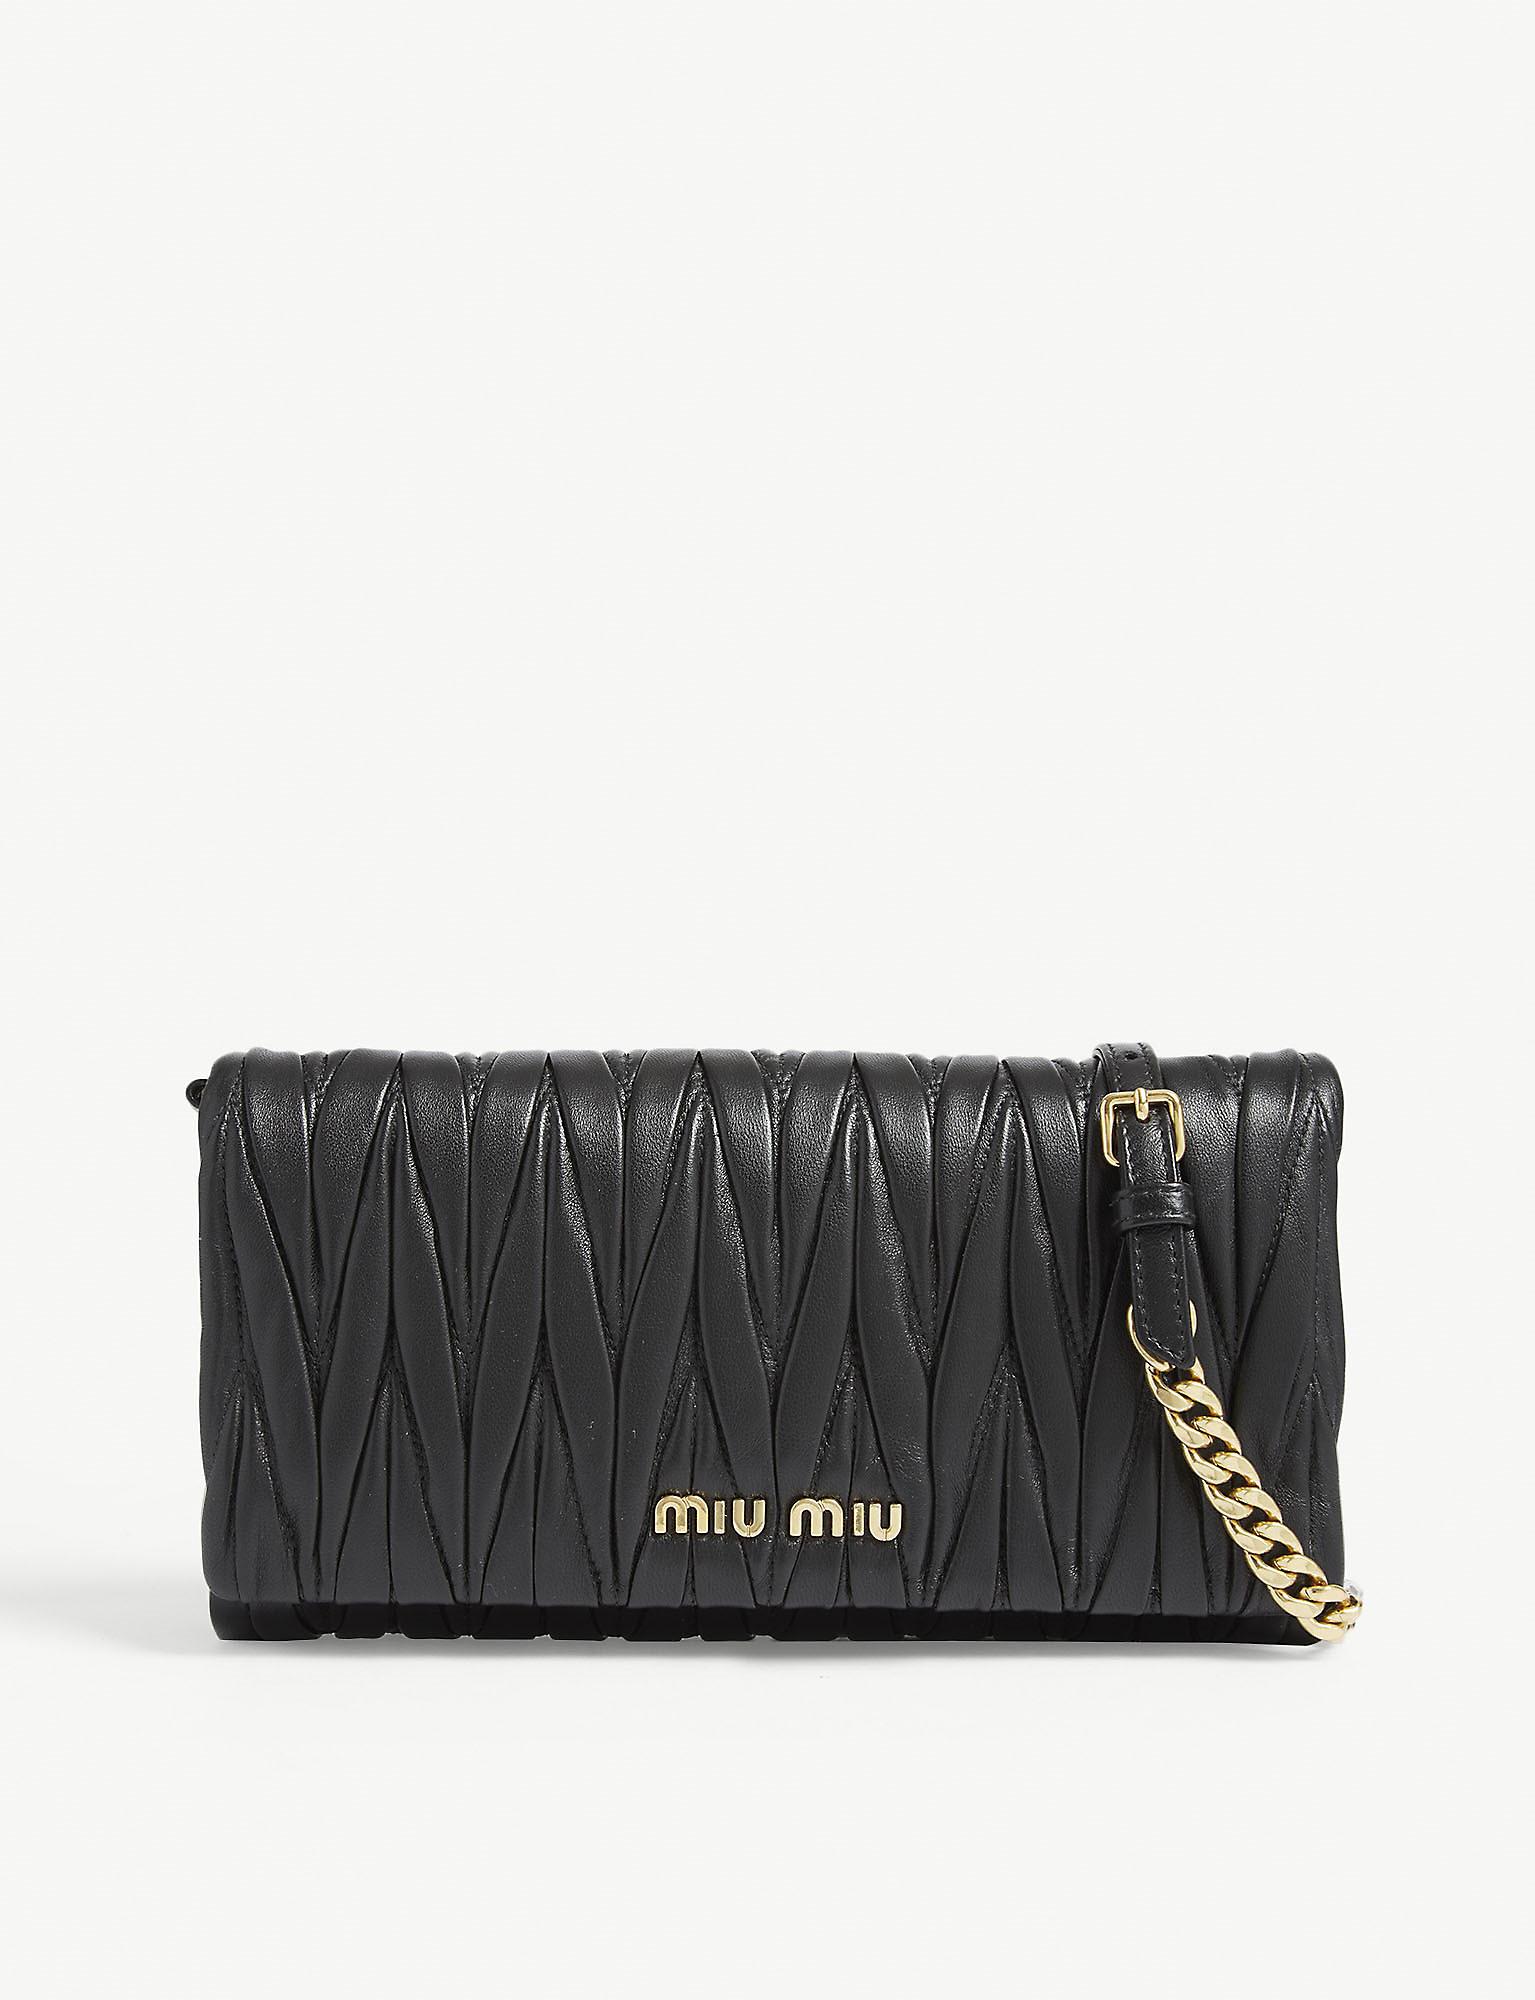 Miu Miu Leather Matelasse Wallet-on-chain in Black - Lyst